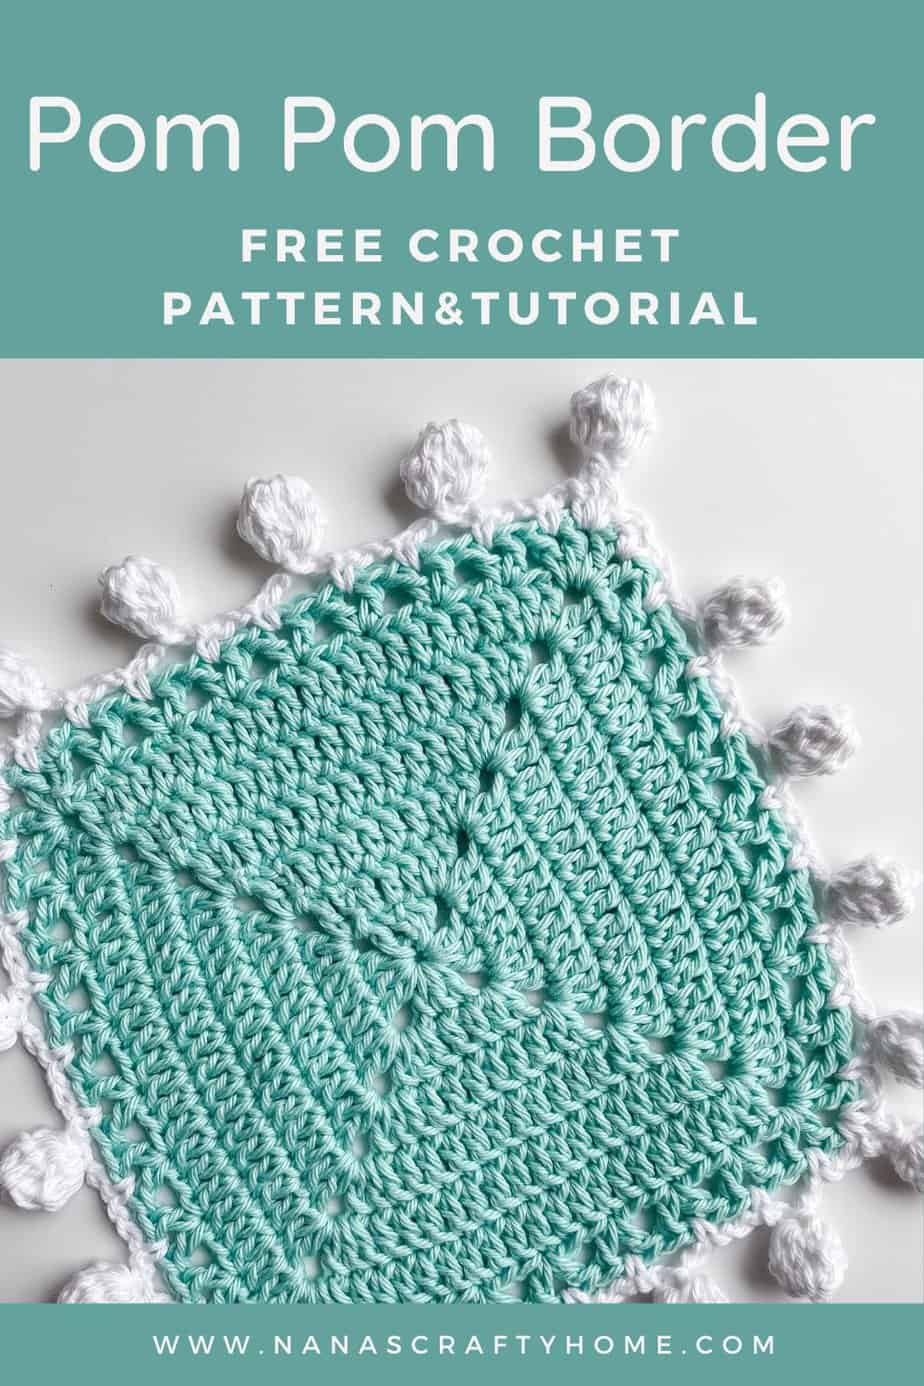 Pom Pom crochet border tutorial